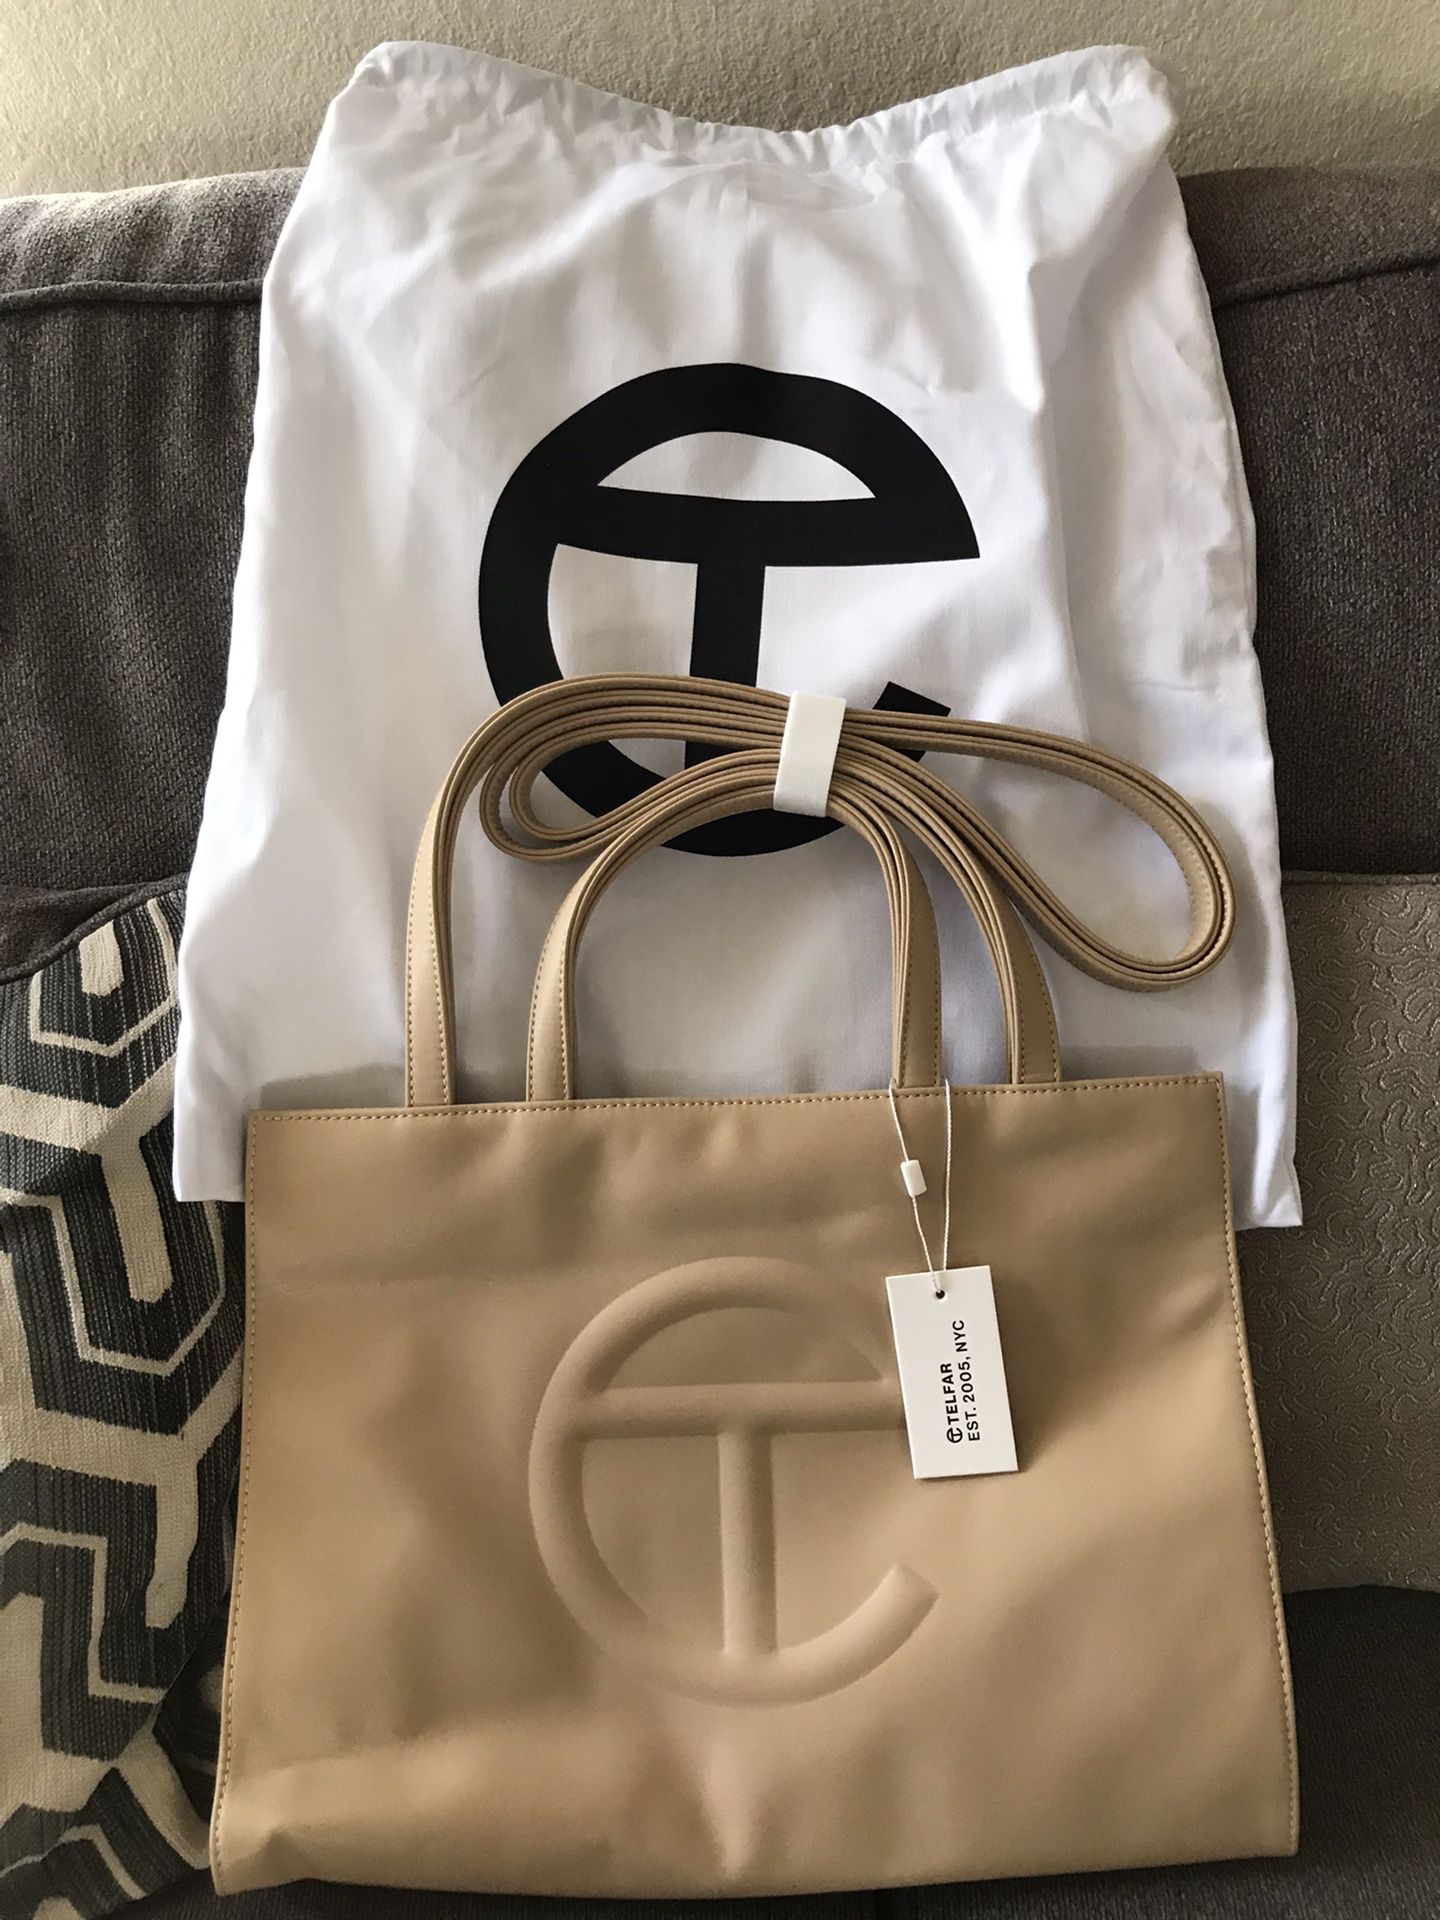 New Telfar Bag